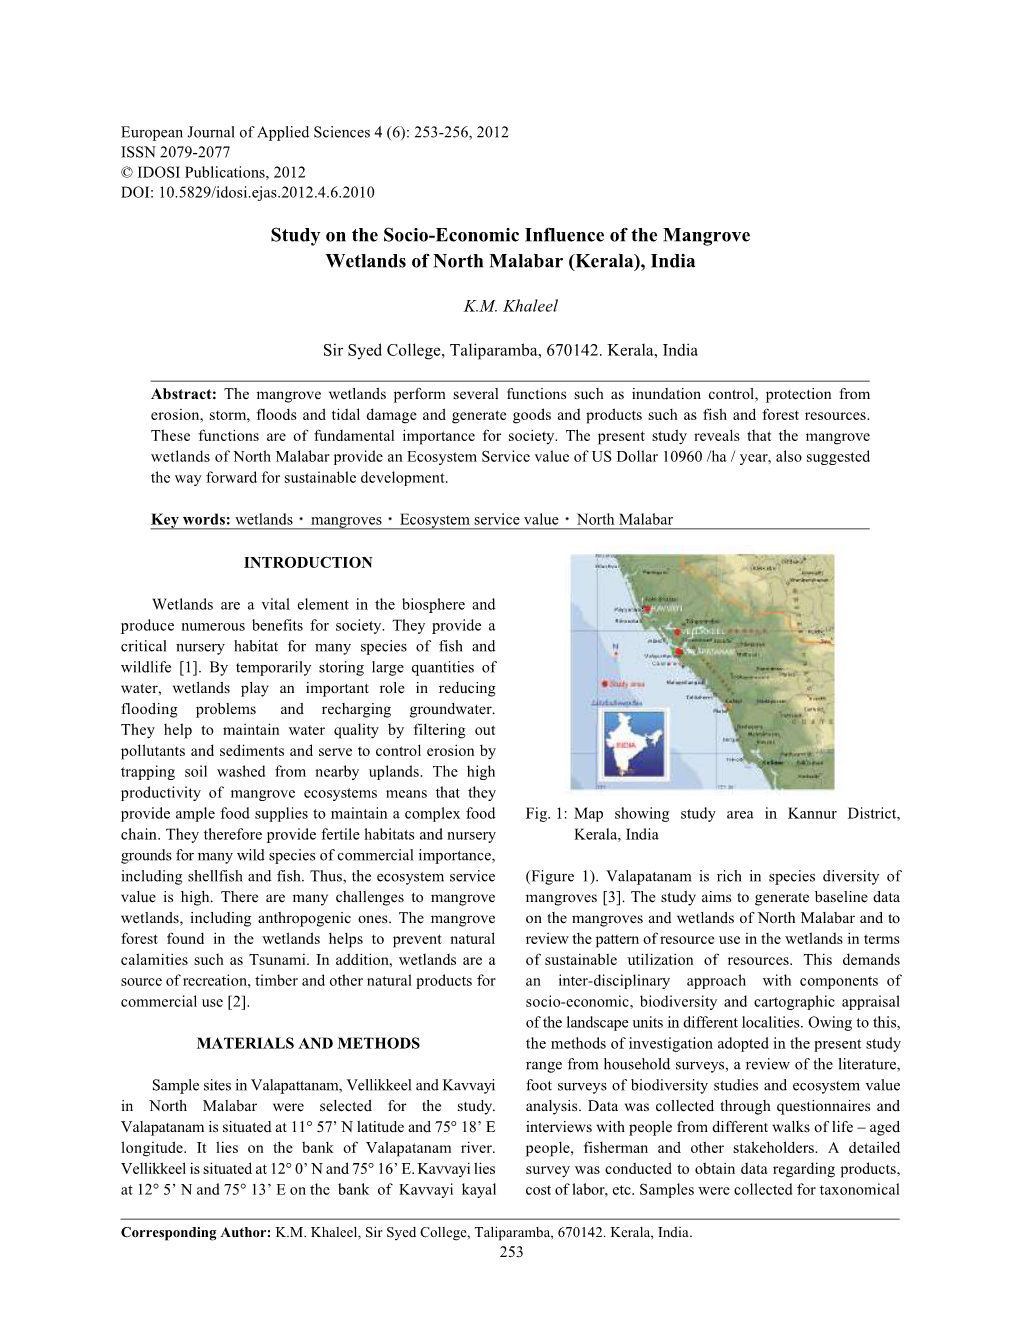 Study on the Socio-Economic Influence of the Mangrove Wetlands of North Malabar (Kerala), India